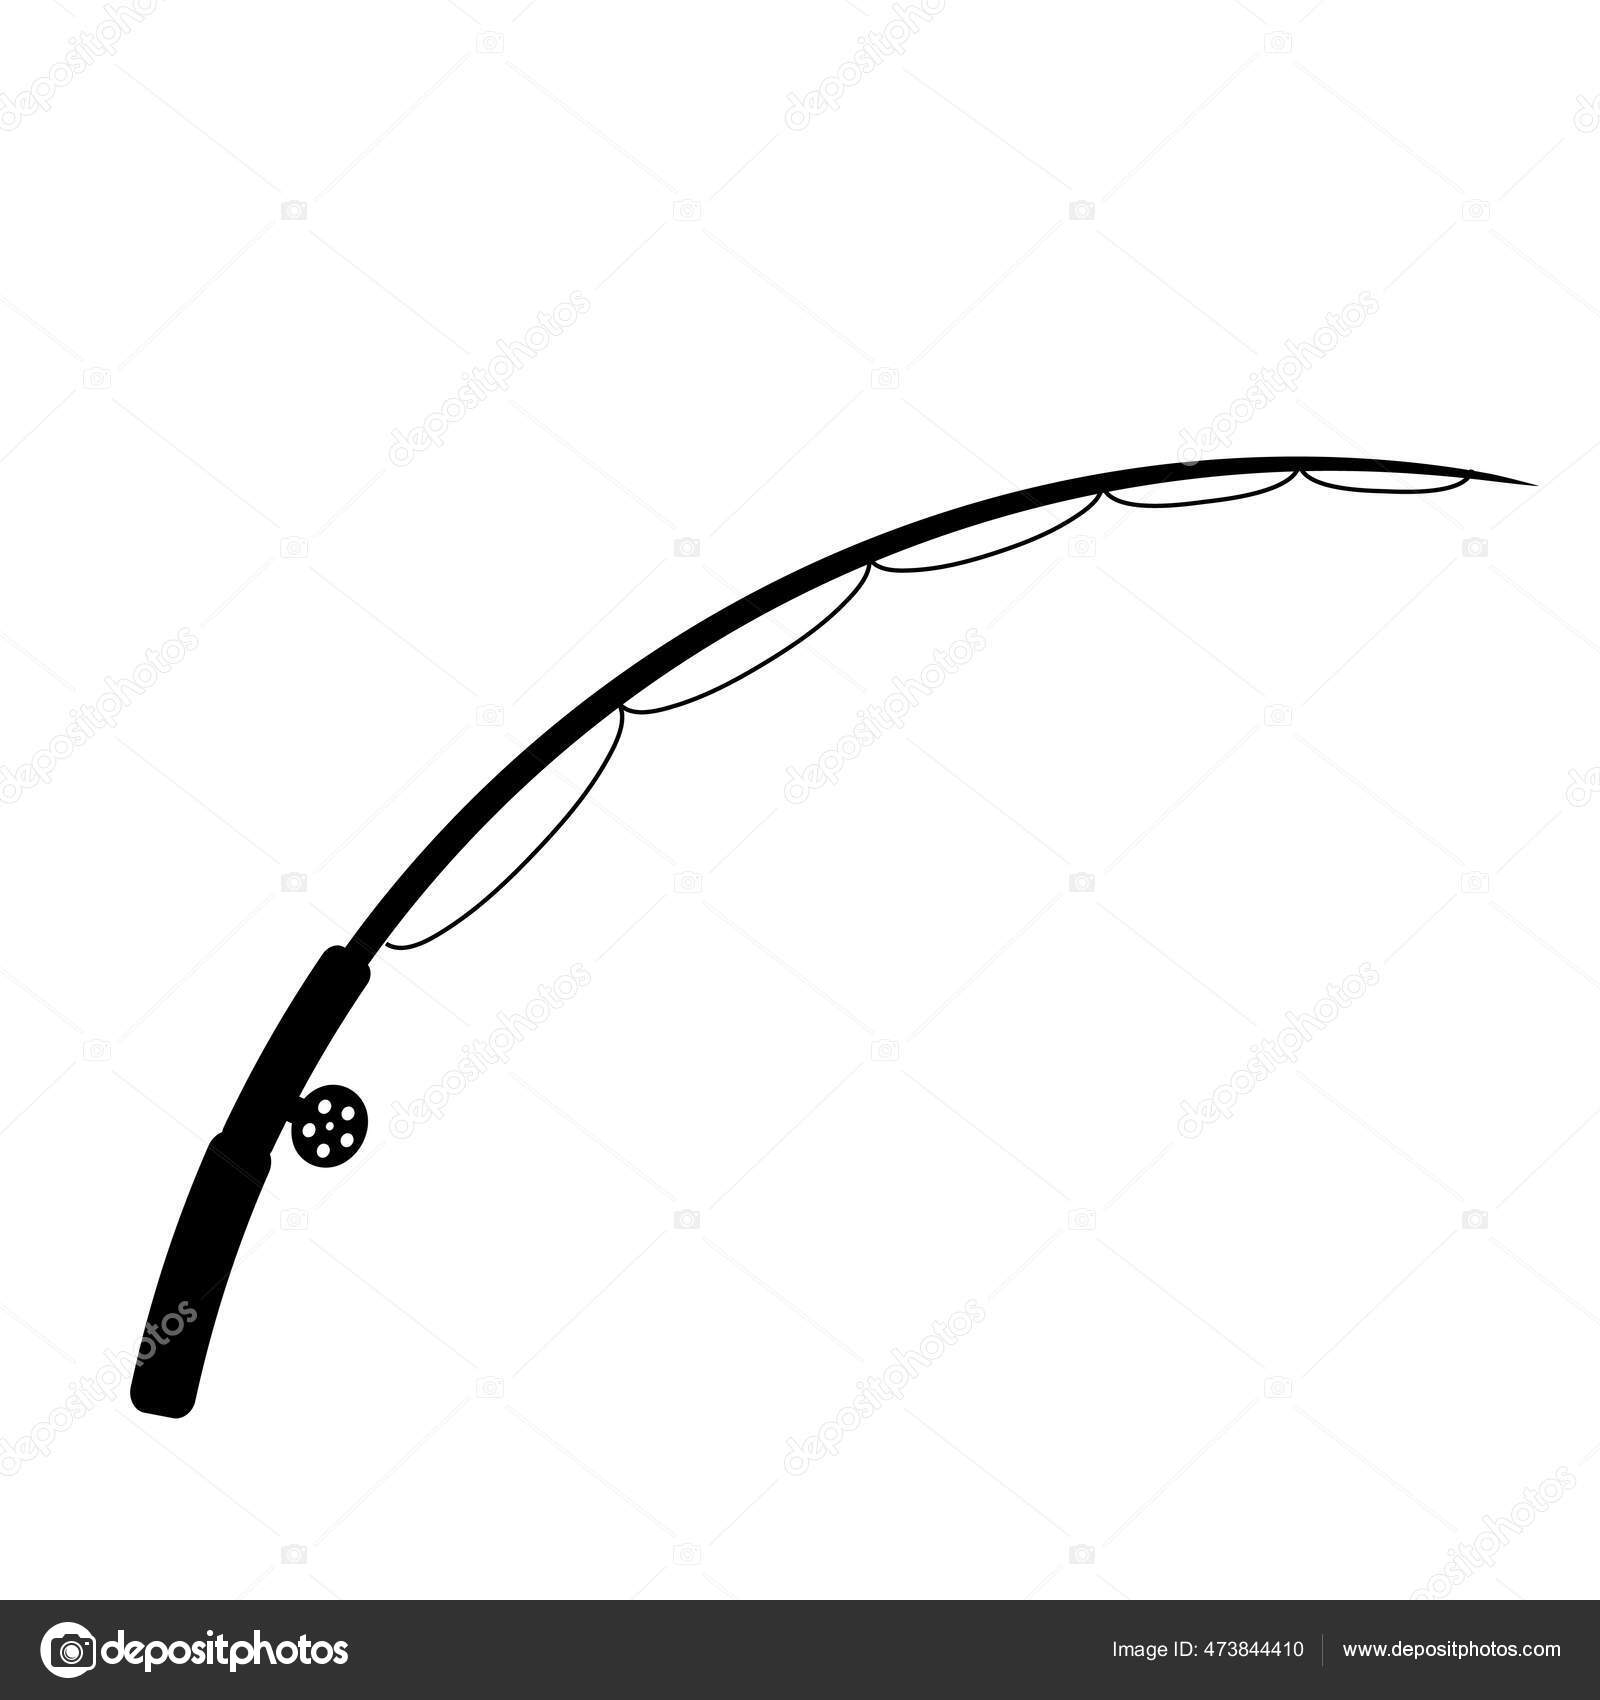 https://st2.depositphotos.com/15809744/47384/v/1600/depositphotos_473844410-stock-illustration-fishing-rod-icon-design-template.jpg